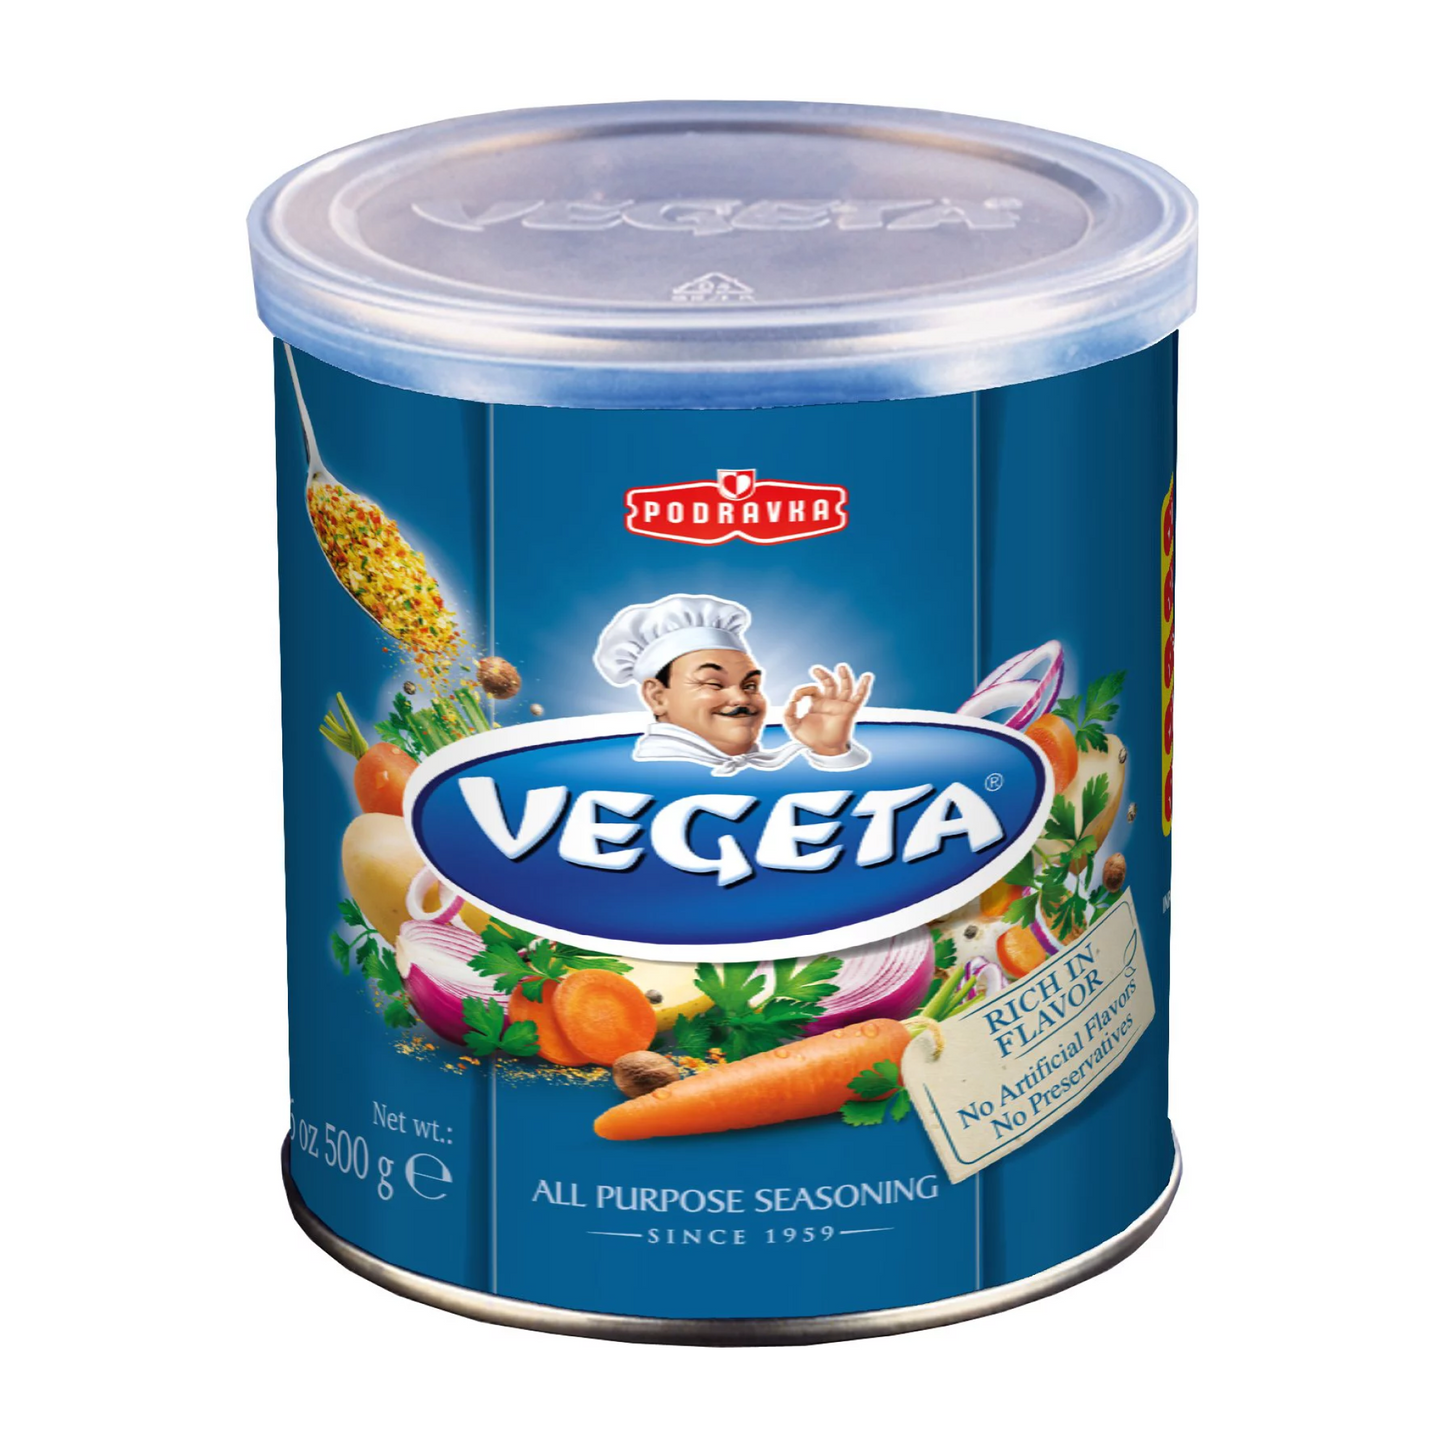 Podravka Vegeta Food Seasoning 500g